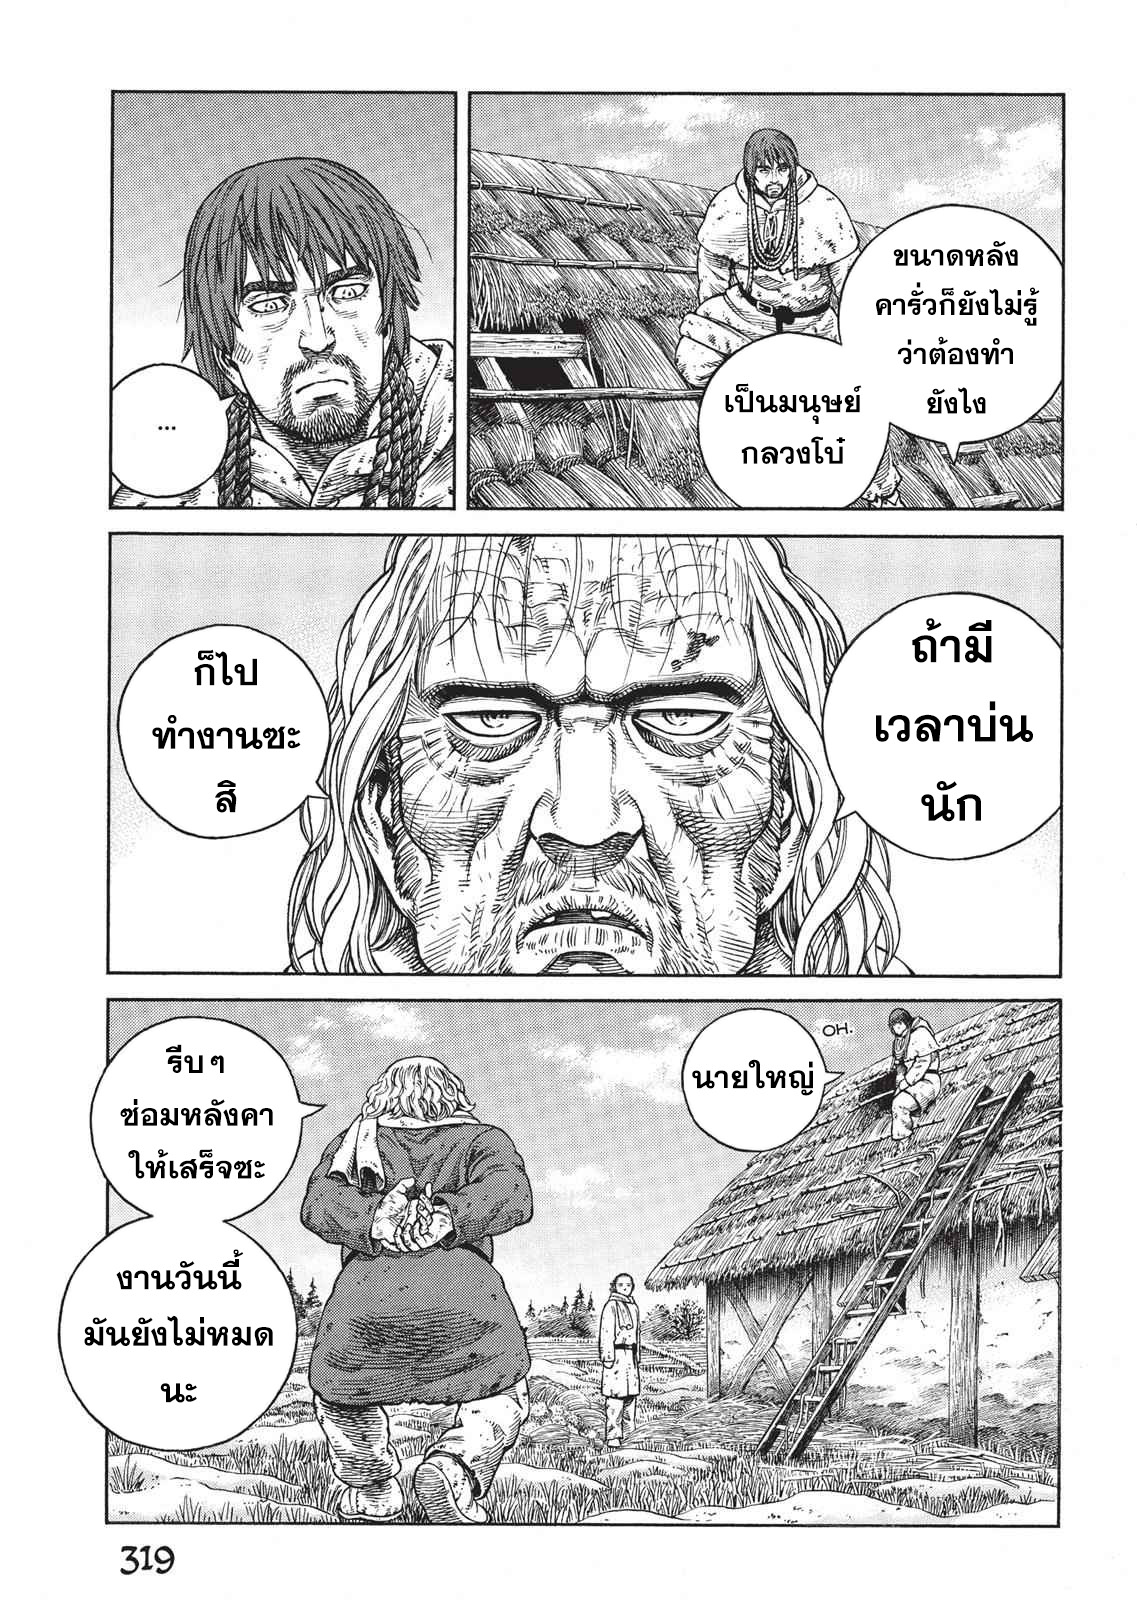 Vinland Saga 68 (21)